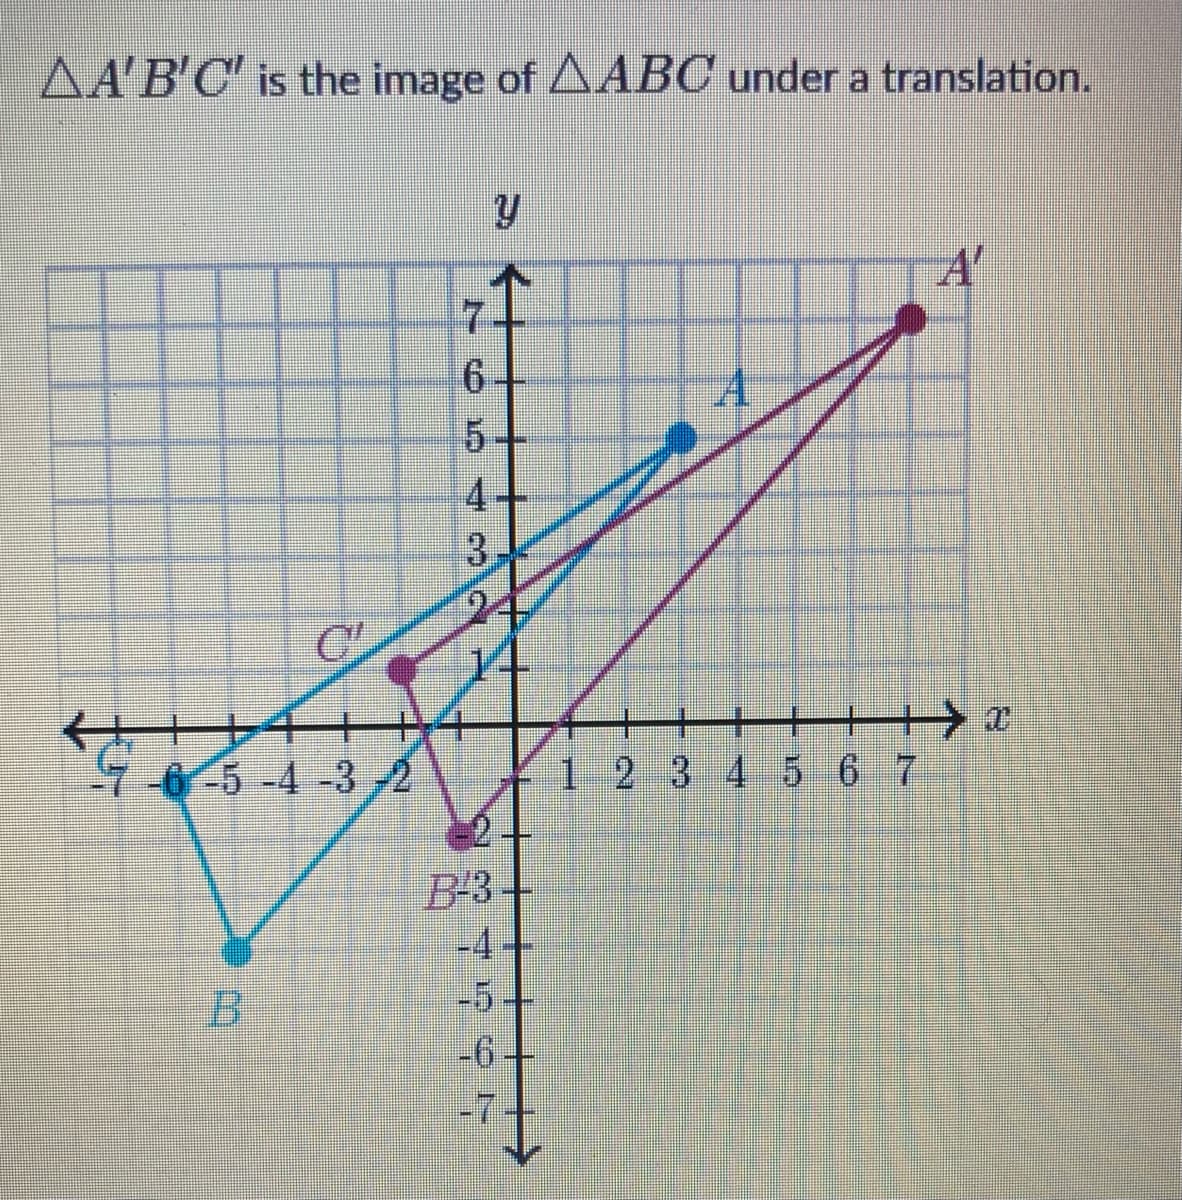 AA'B'C' is the image of AABC under a translation.
स्टु
C
-7-6-5-4-3-2
B
17
IN
6
bunda 1.
J
B-3
7467
Y
-4-
-6-
A
A
++ ¤
1 2 3 4 5 6 7